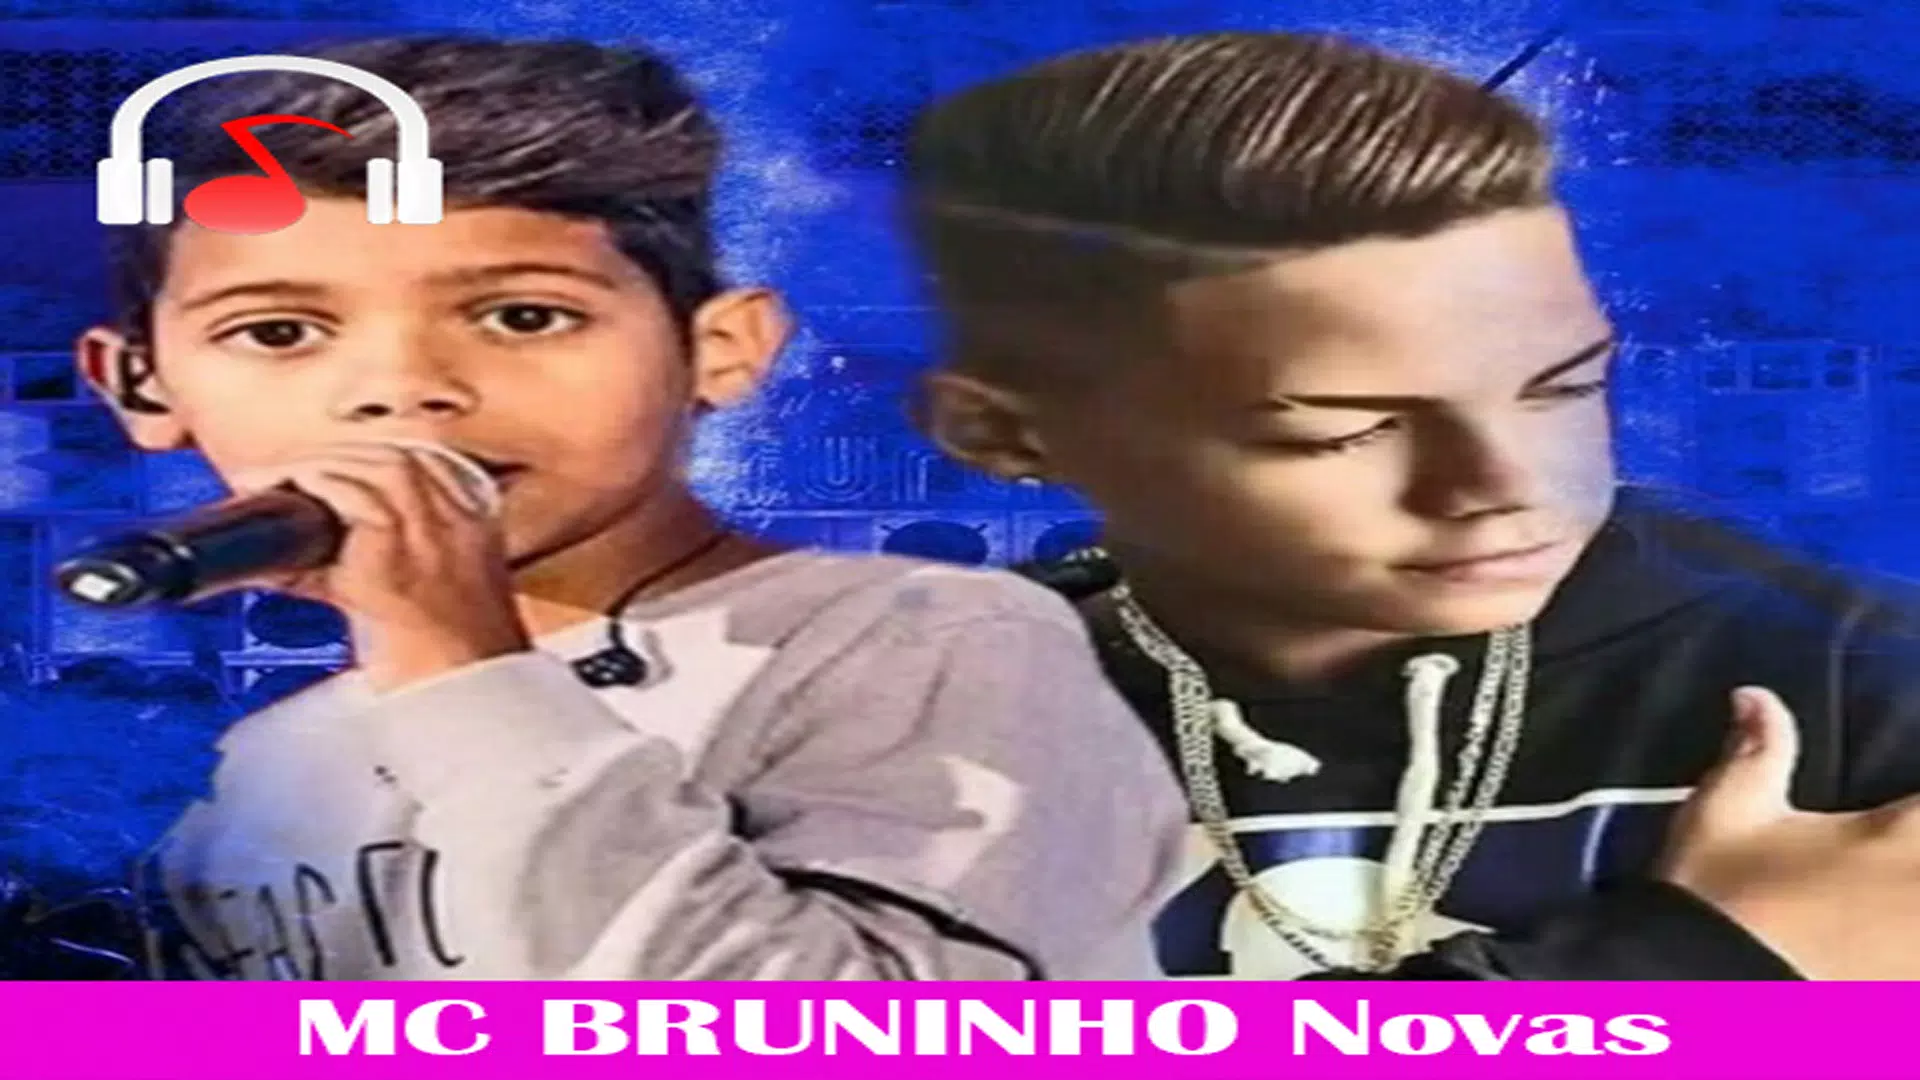 NUEVA) Jogo do Amor - MC Bruninho (Música) APK voor Android Download